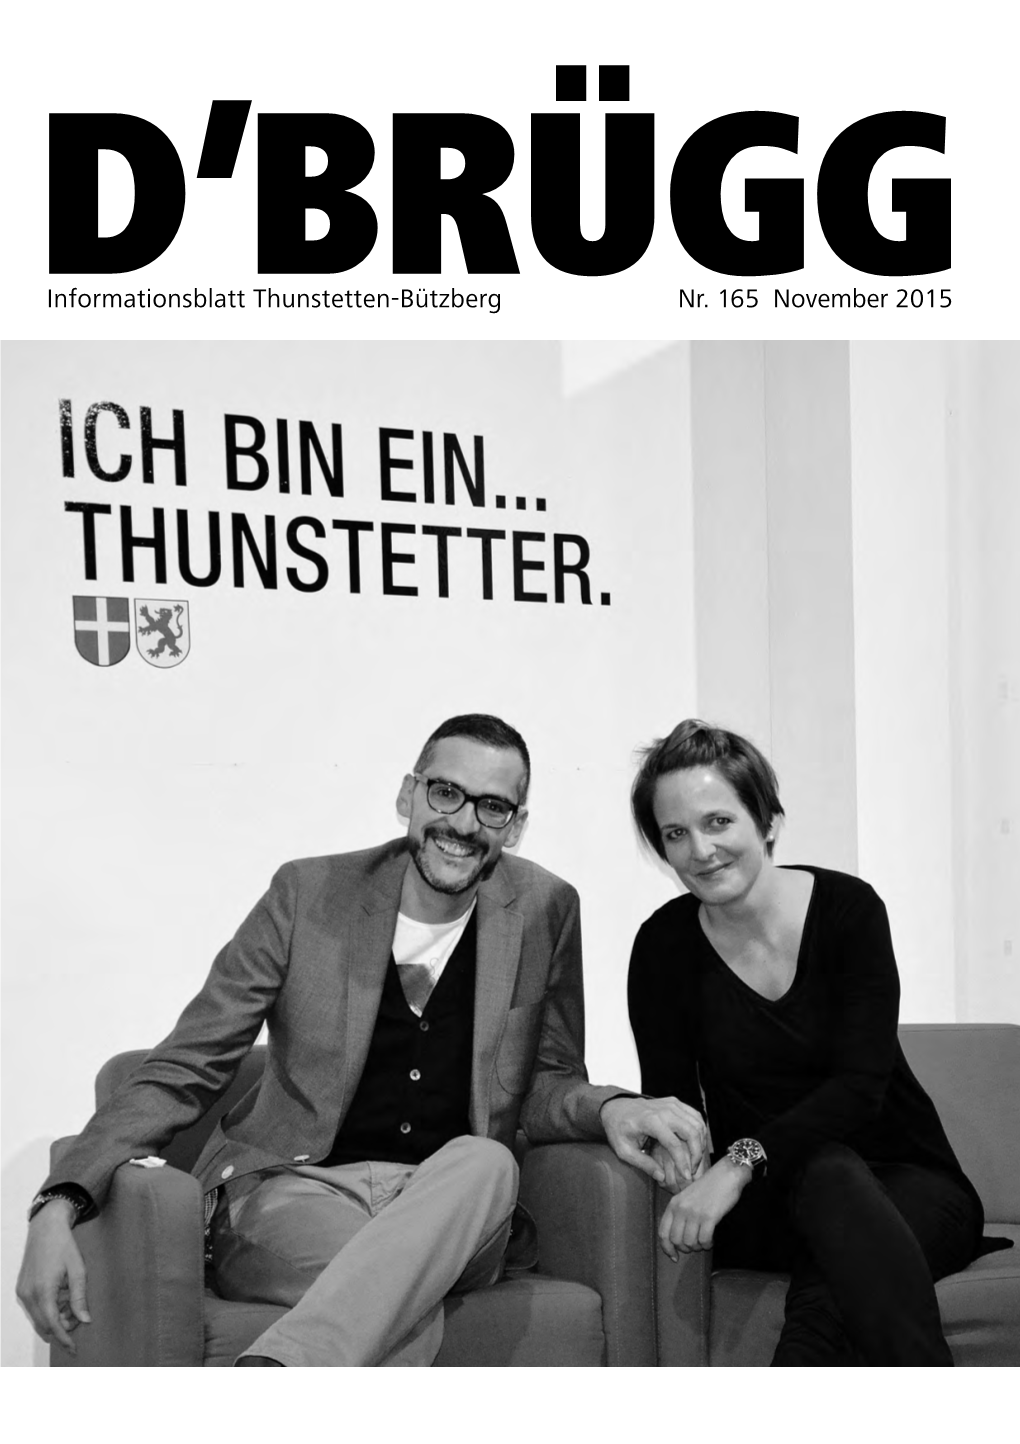 Informationsblatt Thunstetten-Bützberg Nr. 165 November 2015 *Brügg Nr.165 November 2015 10.11.2015 10:31 Uhr Seite 2